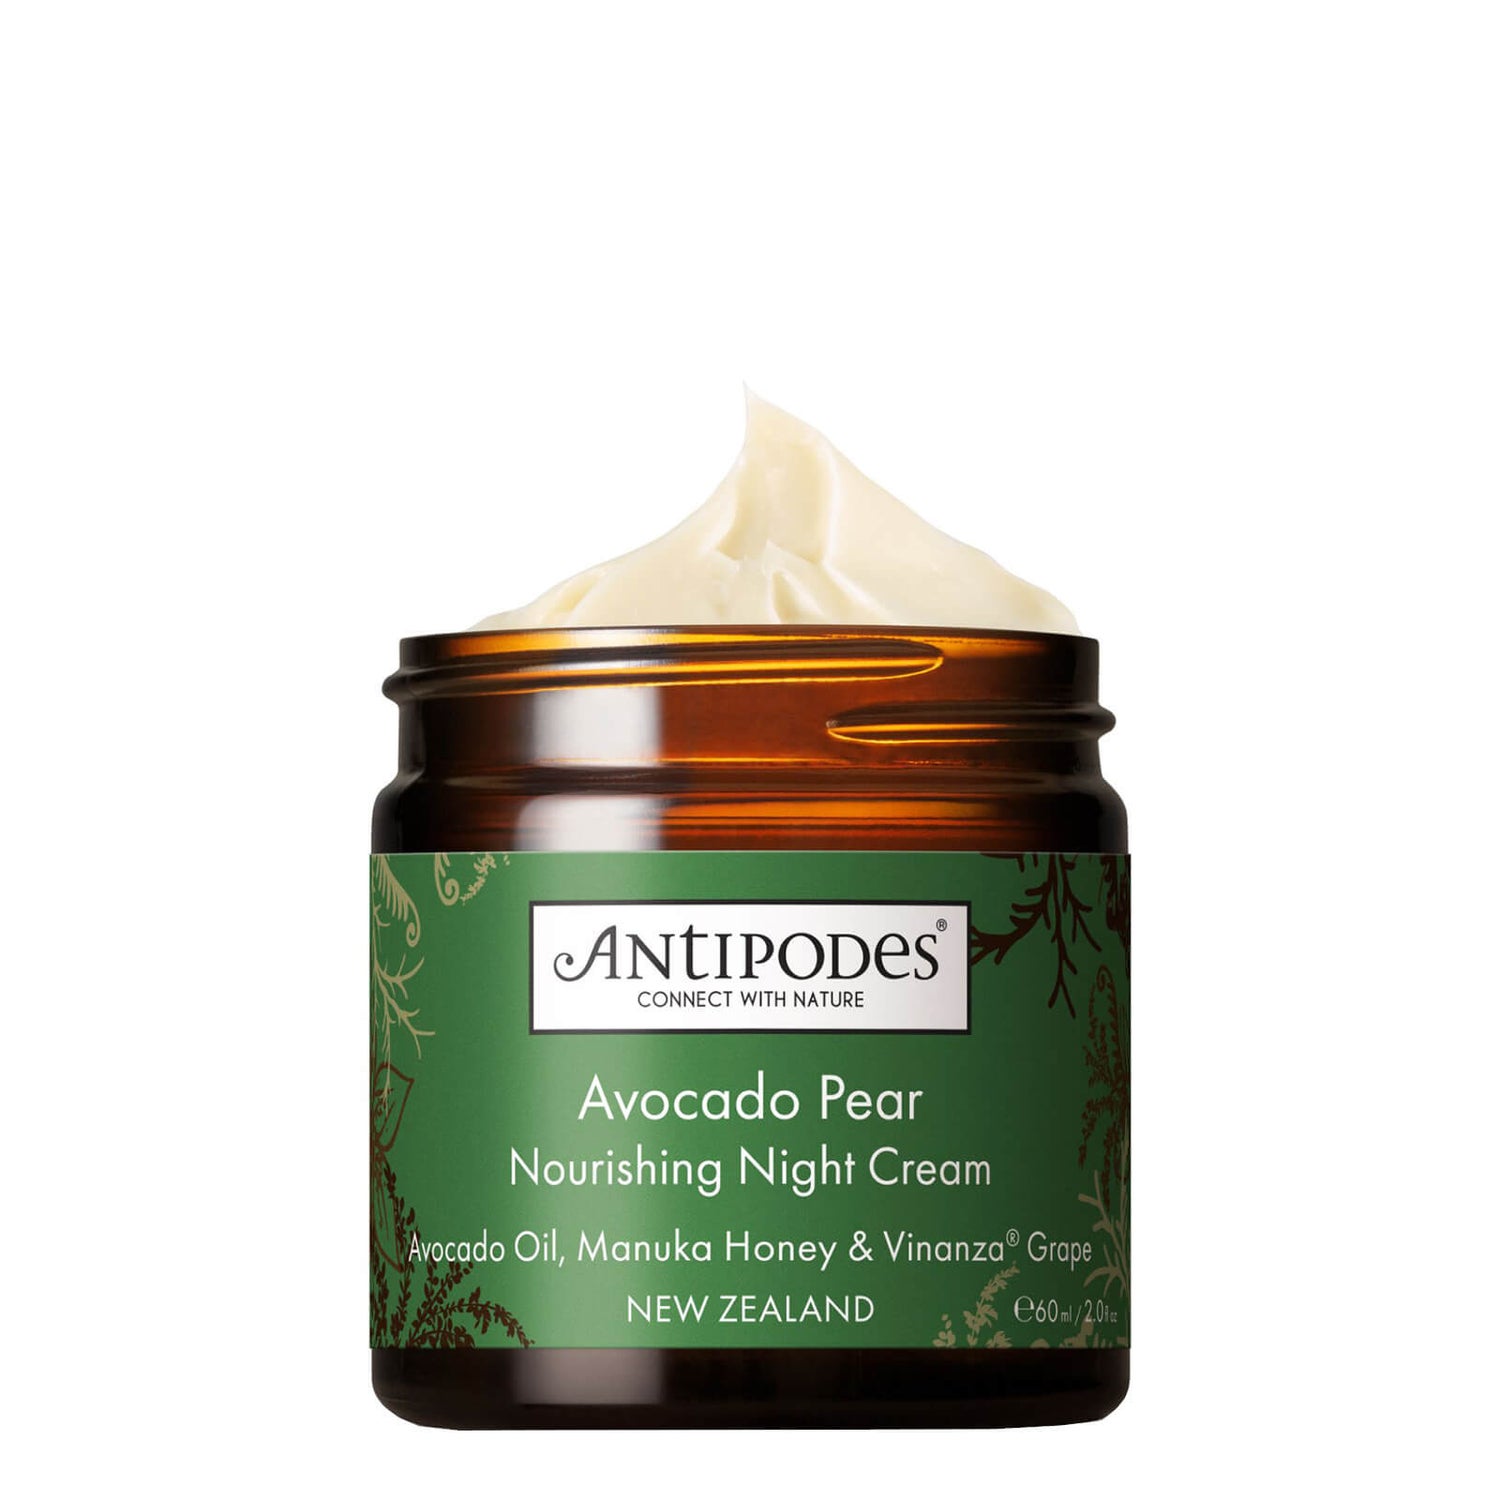 Antipodes Avocado Pear Nourishing Night Cream (60 ml)